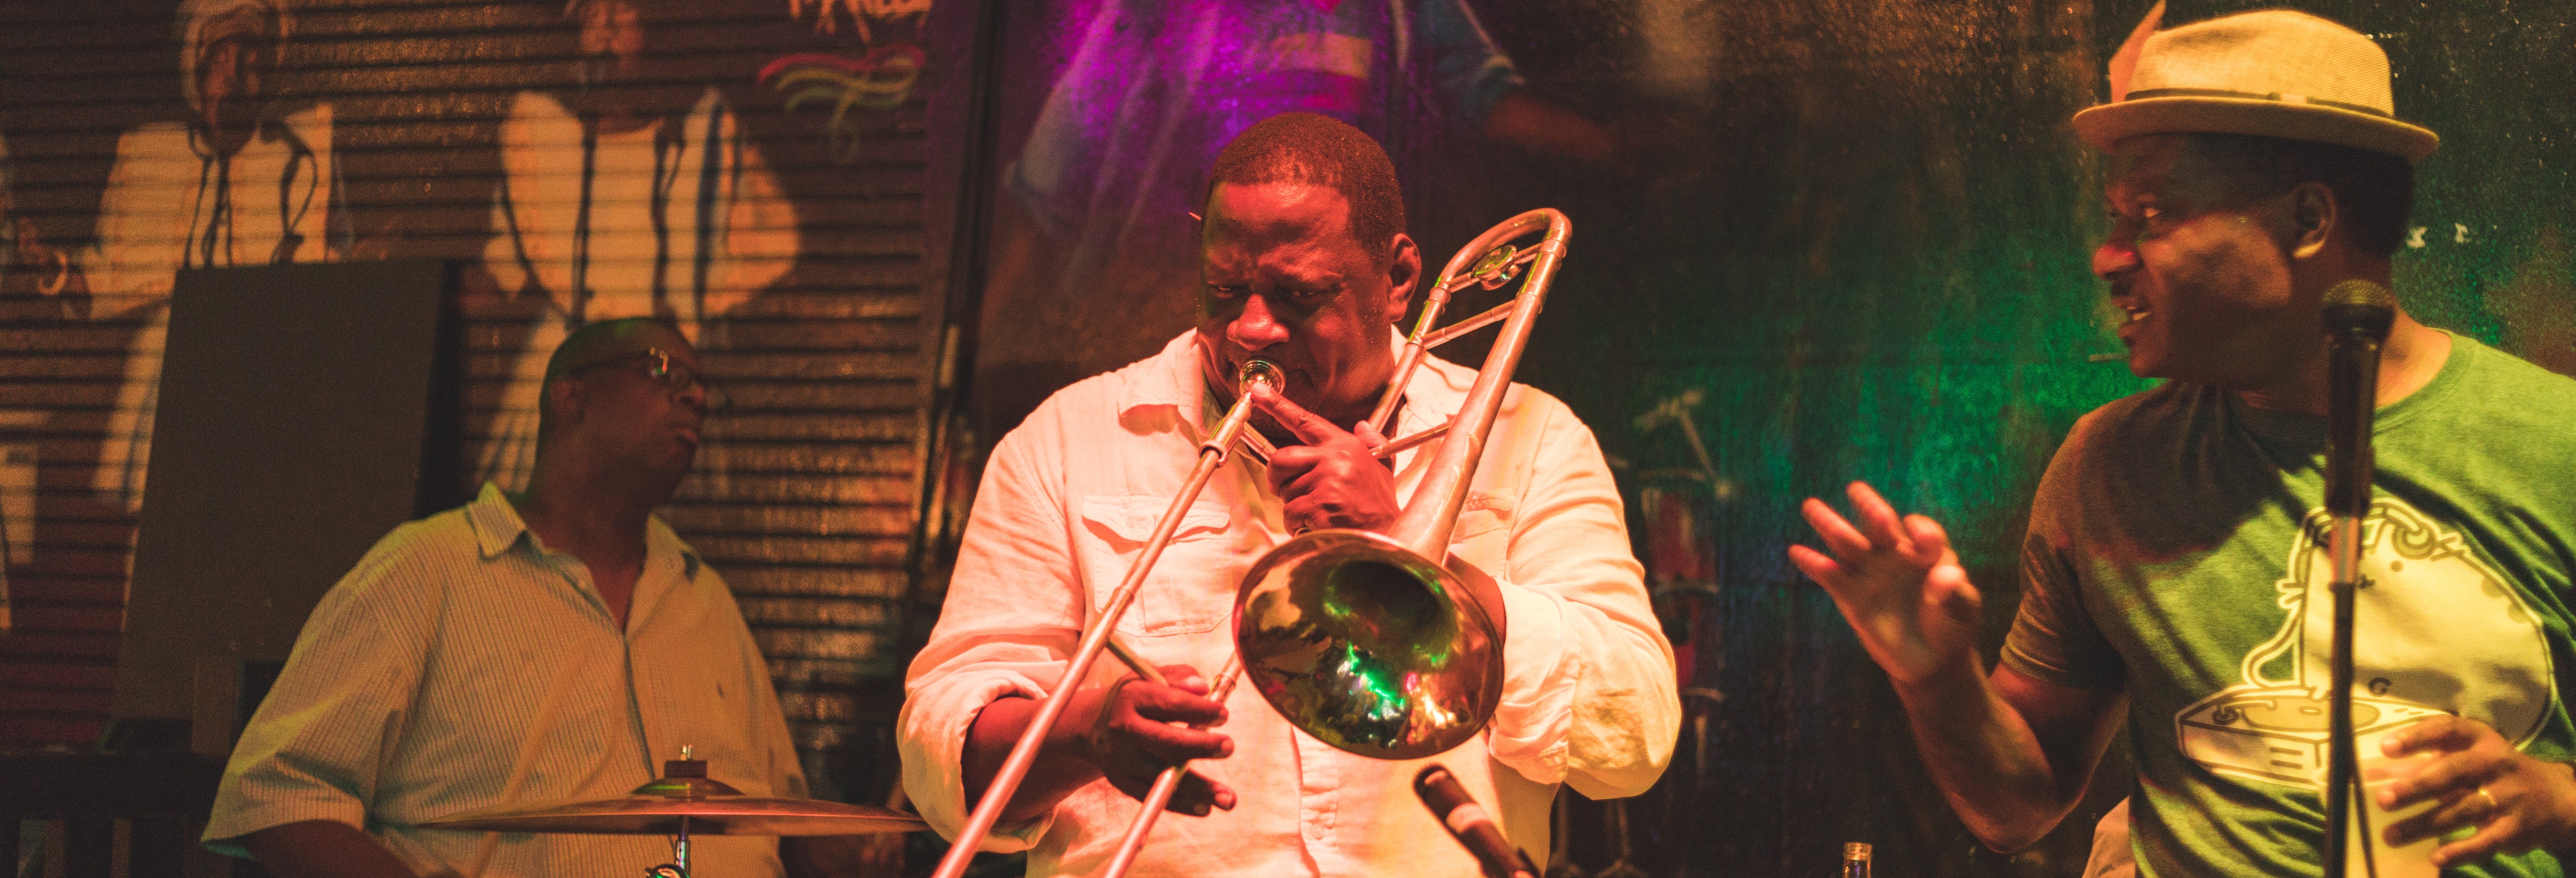 Tour noturno do jazz por New Orleans